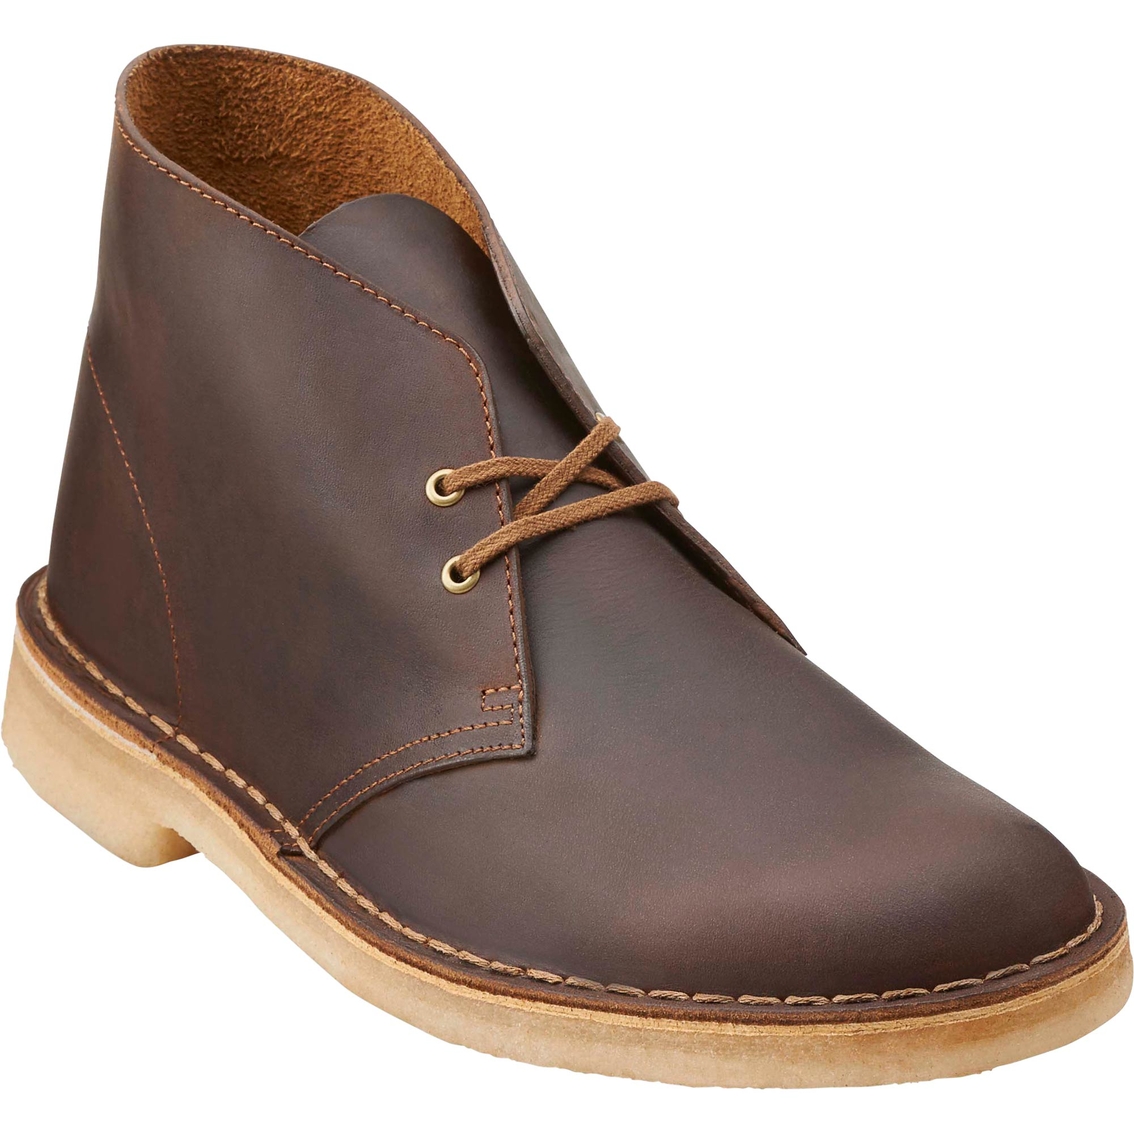 Clarks Men's Desert Chukka Boots | Casual | Shoes | Shop The Exchange